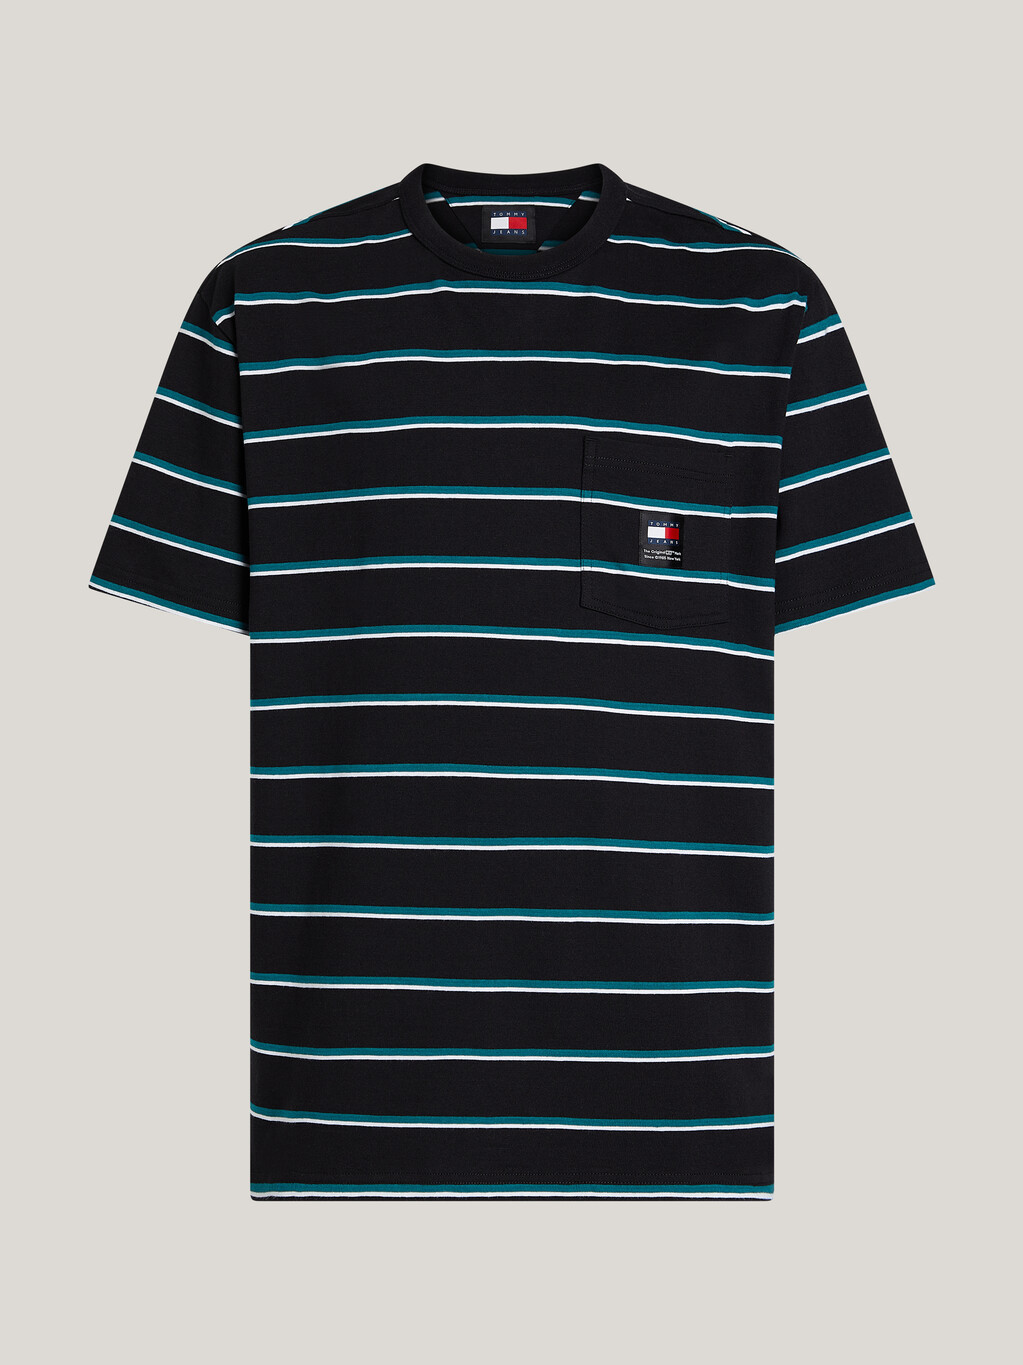 Stripe Transitional Cotton T-Shirt, Black, hi-res